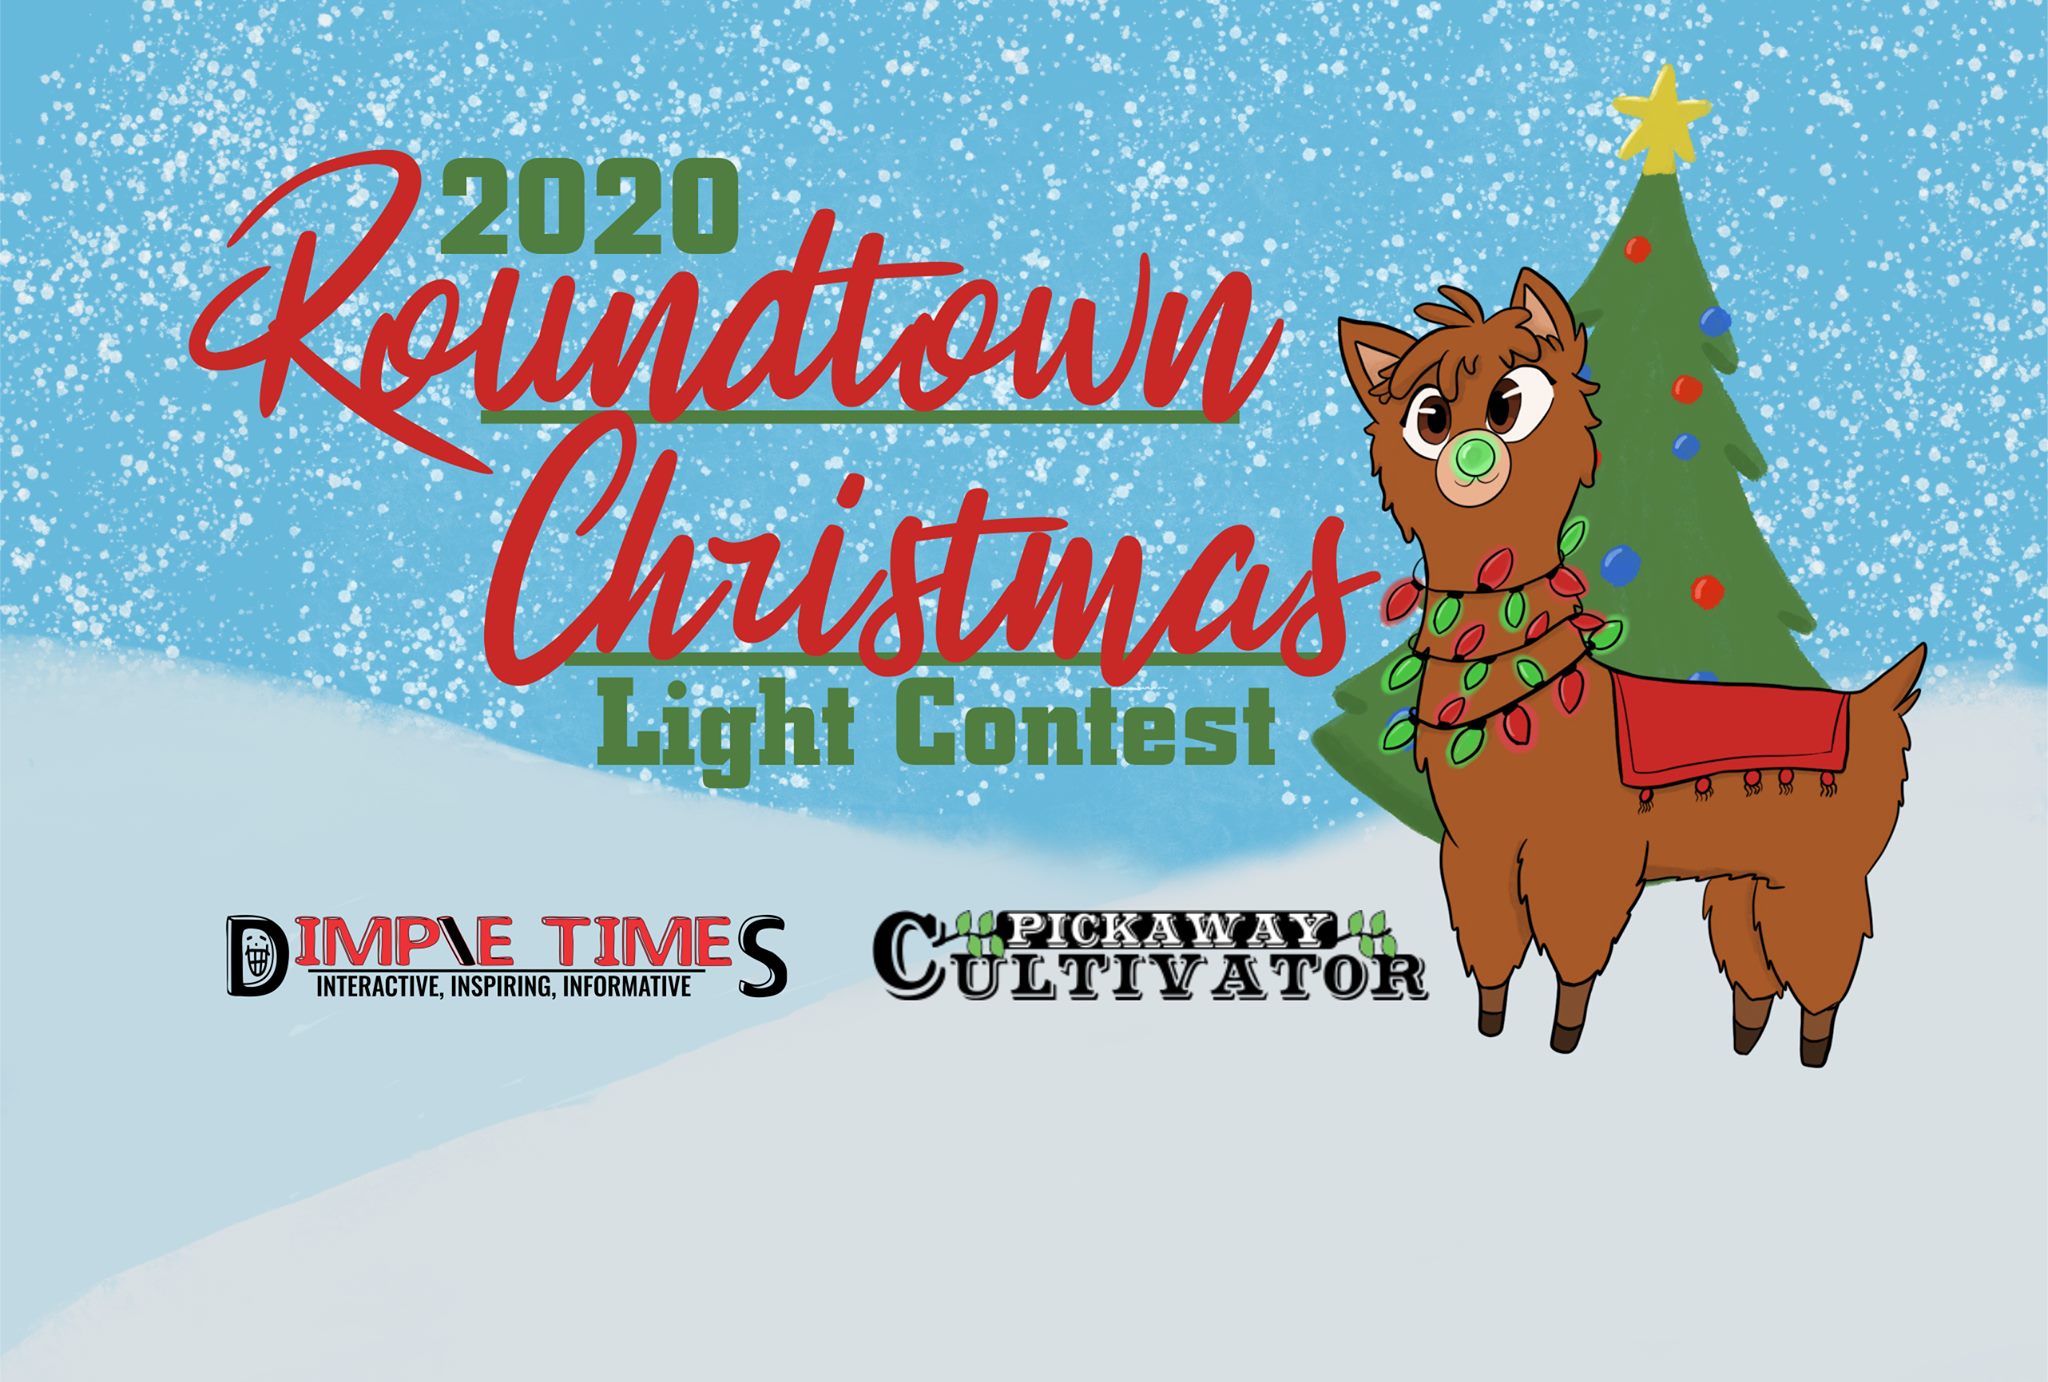 Roundtown Christmas Light Contest - 2020